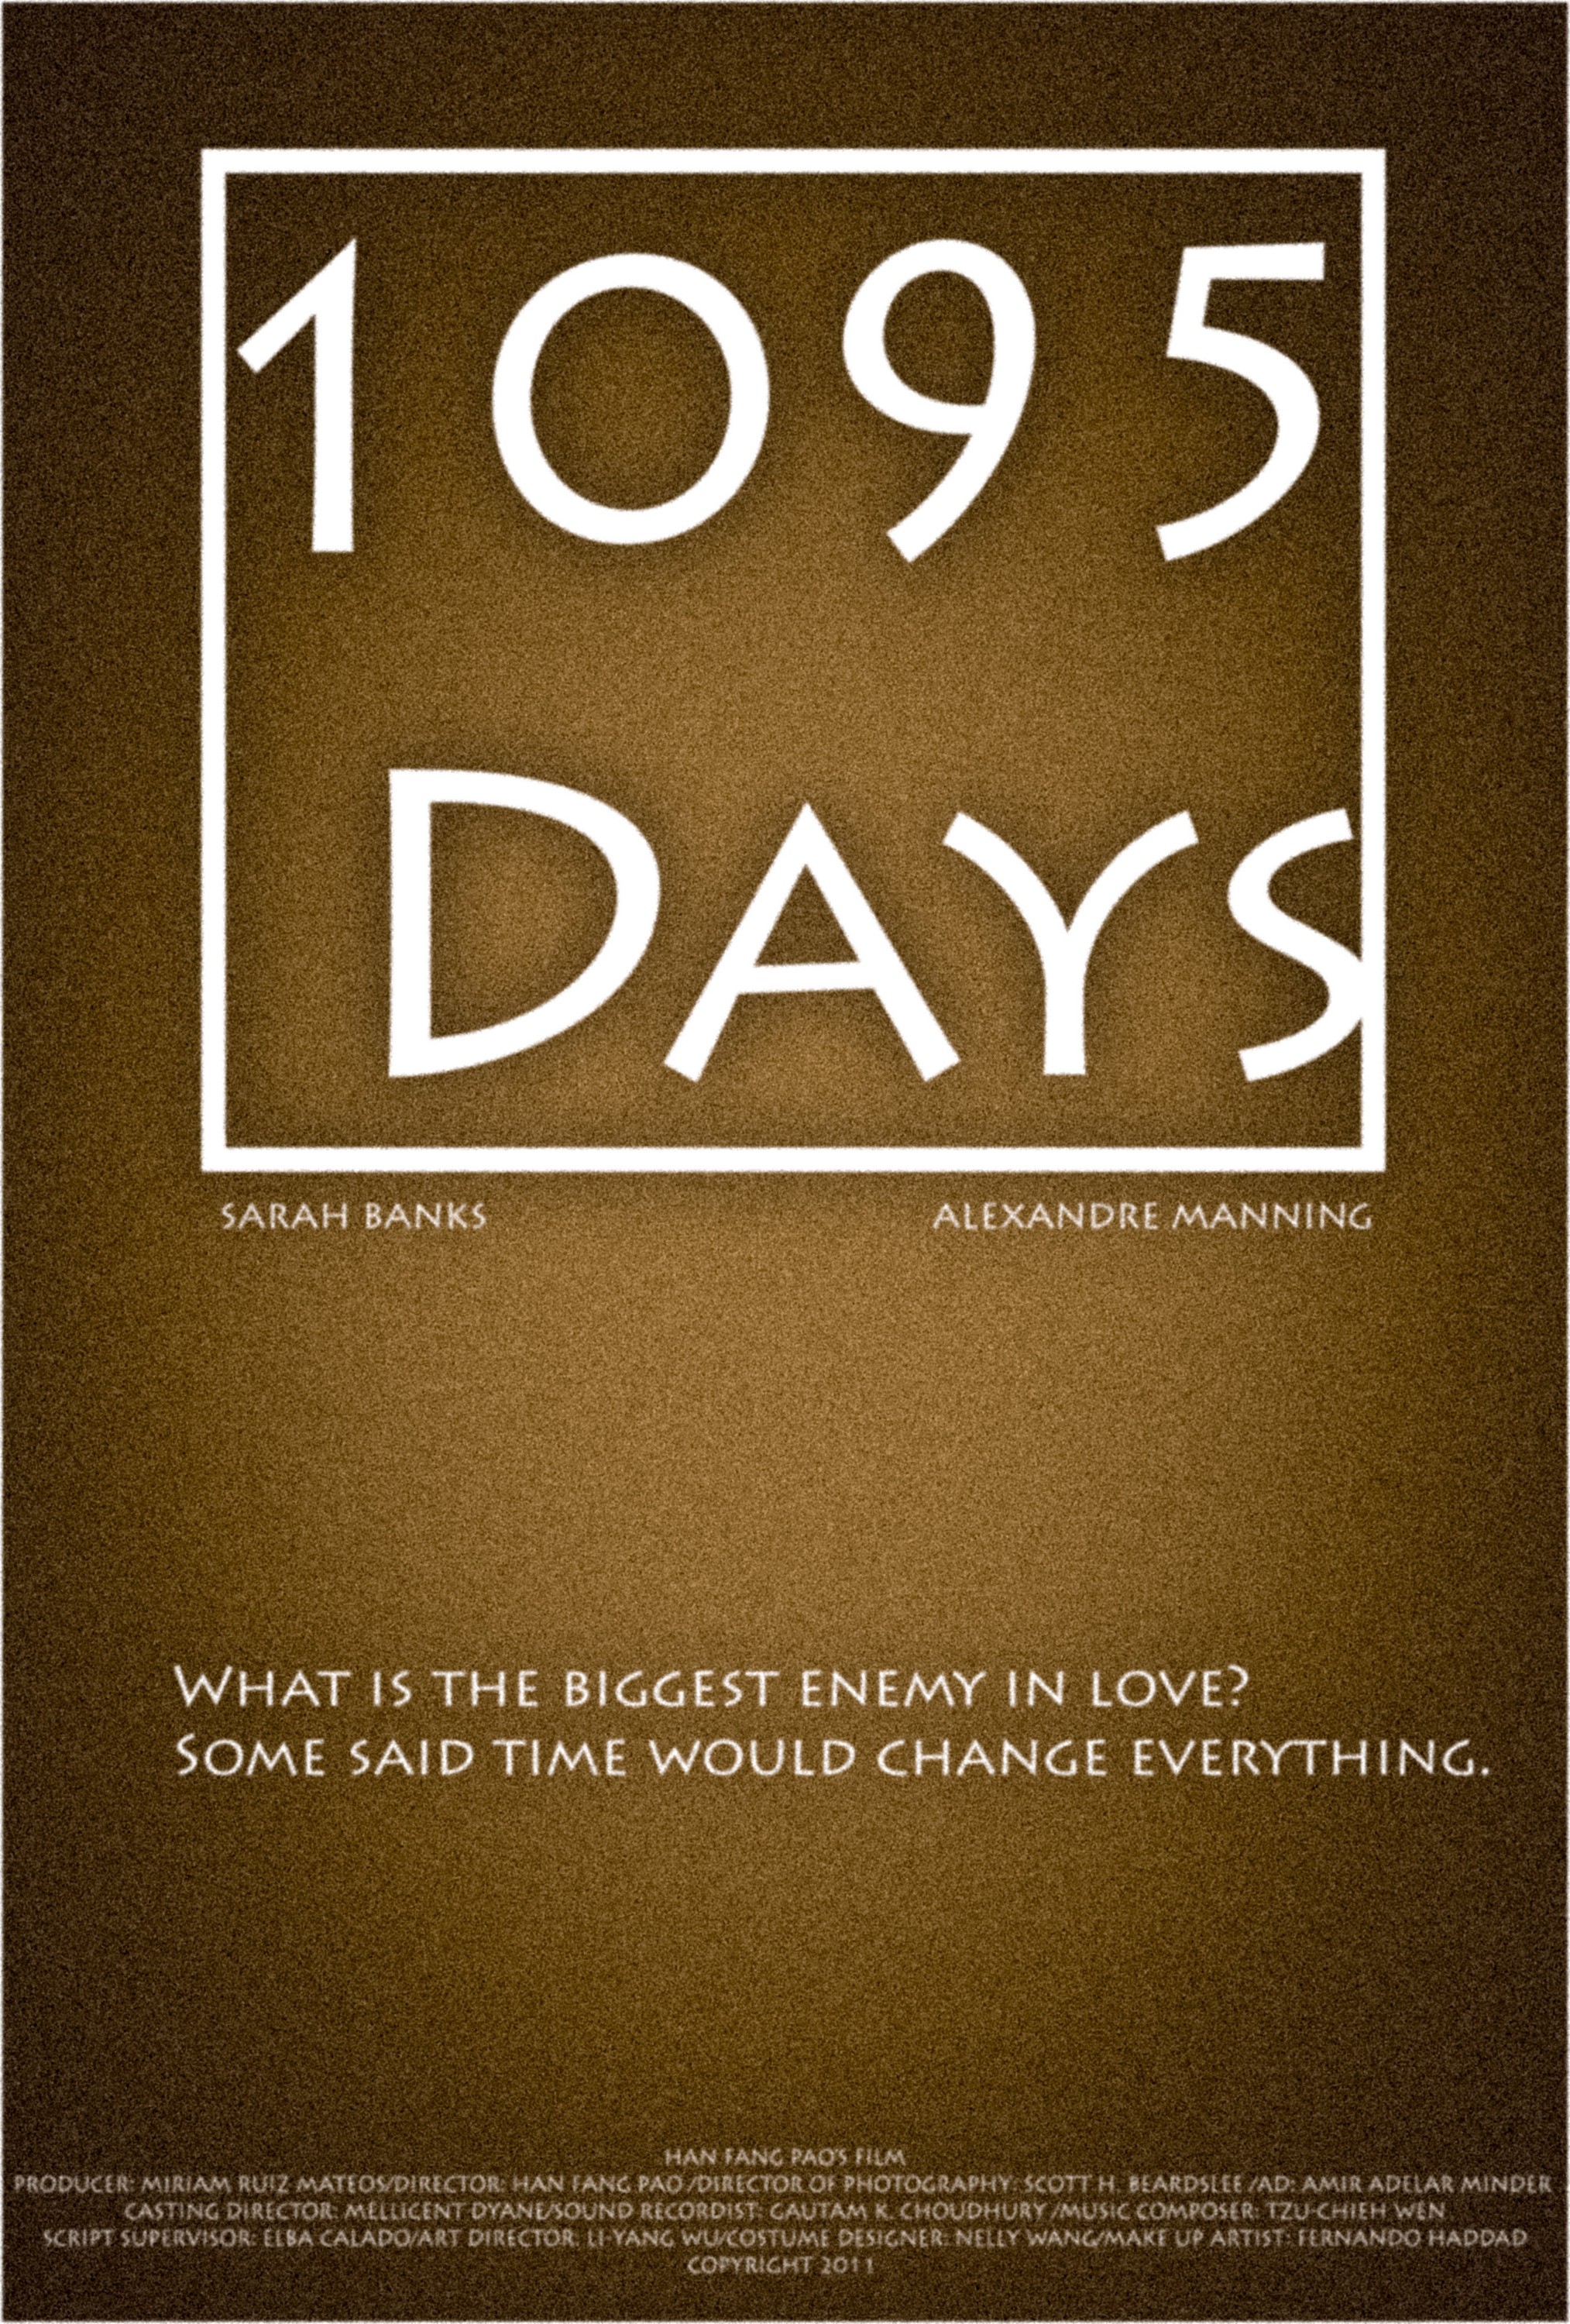 Mega Sized Movie Poster Image for 1095 Days